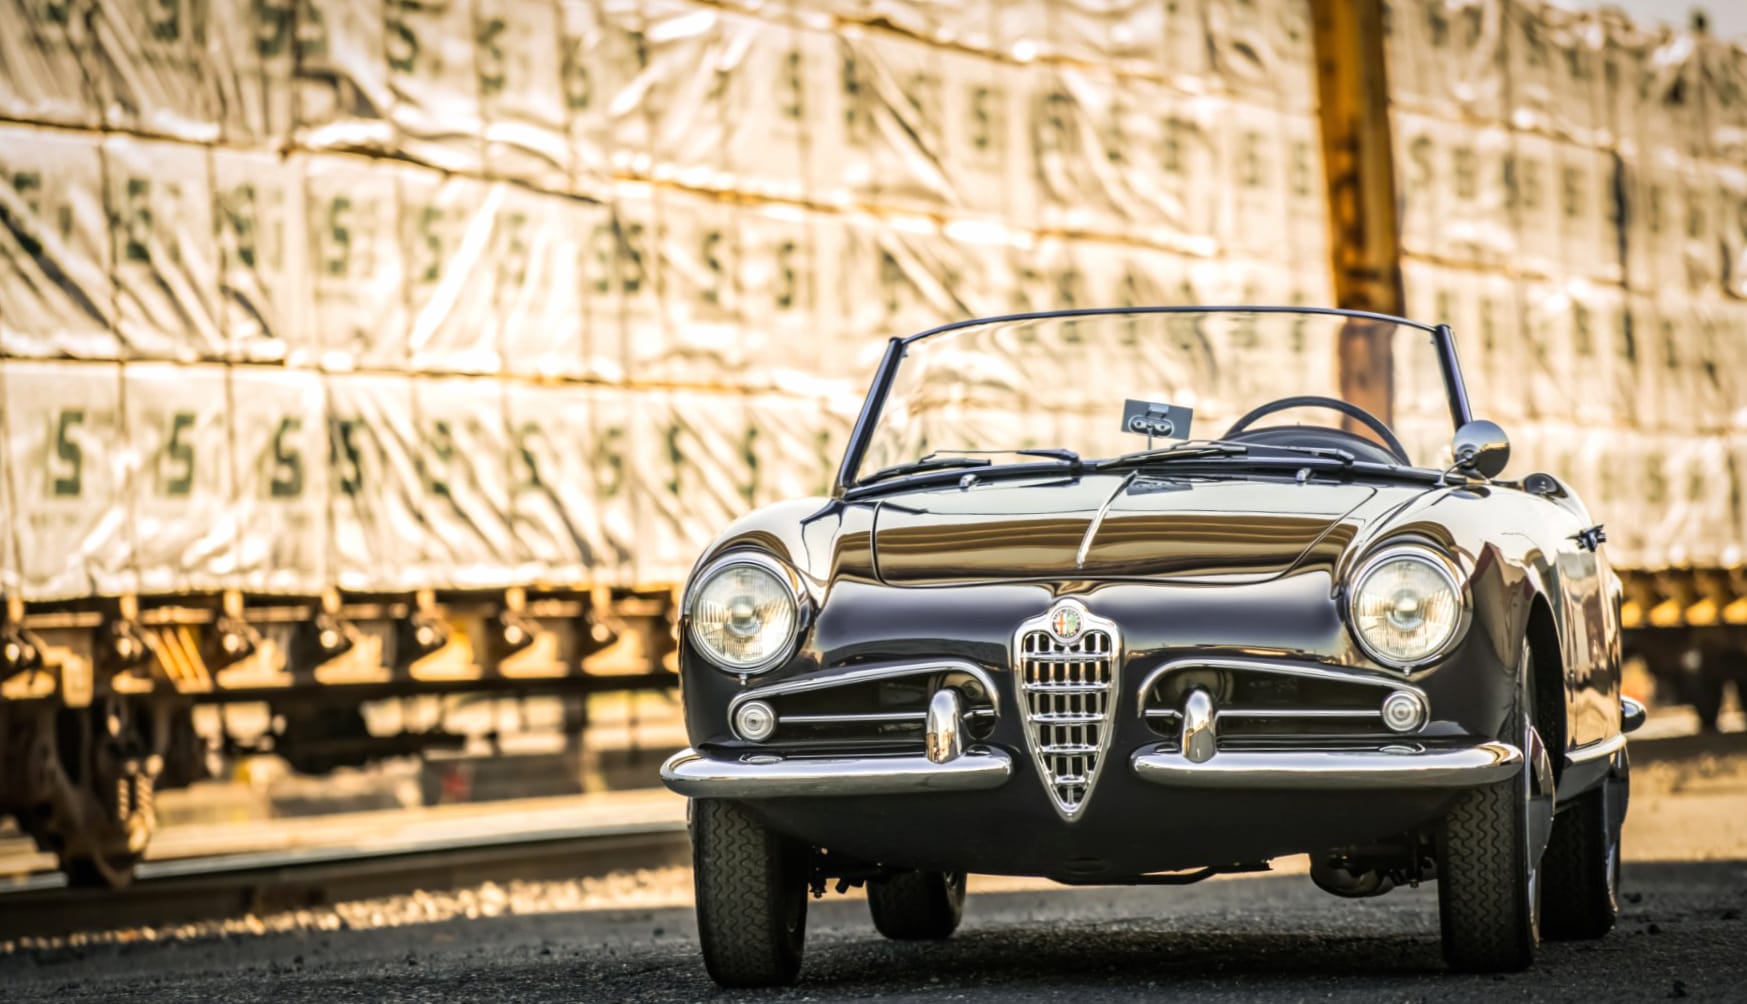 Alfa Romeo Giulietta Spider at 1024 x 768 size wallpapers HD quality